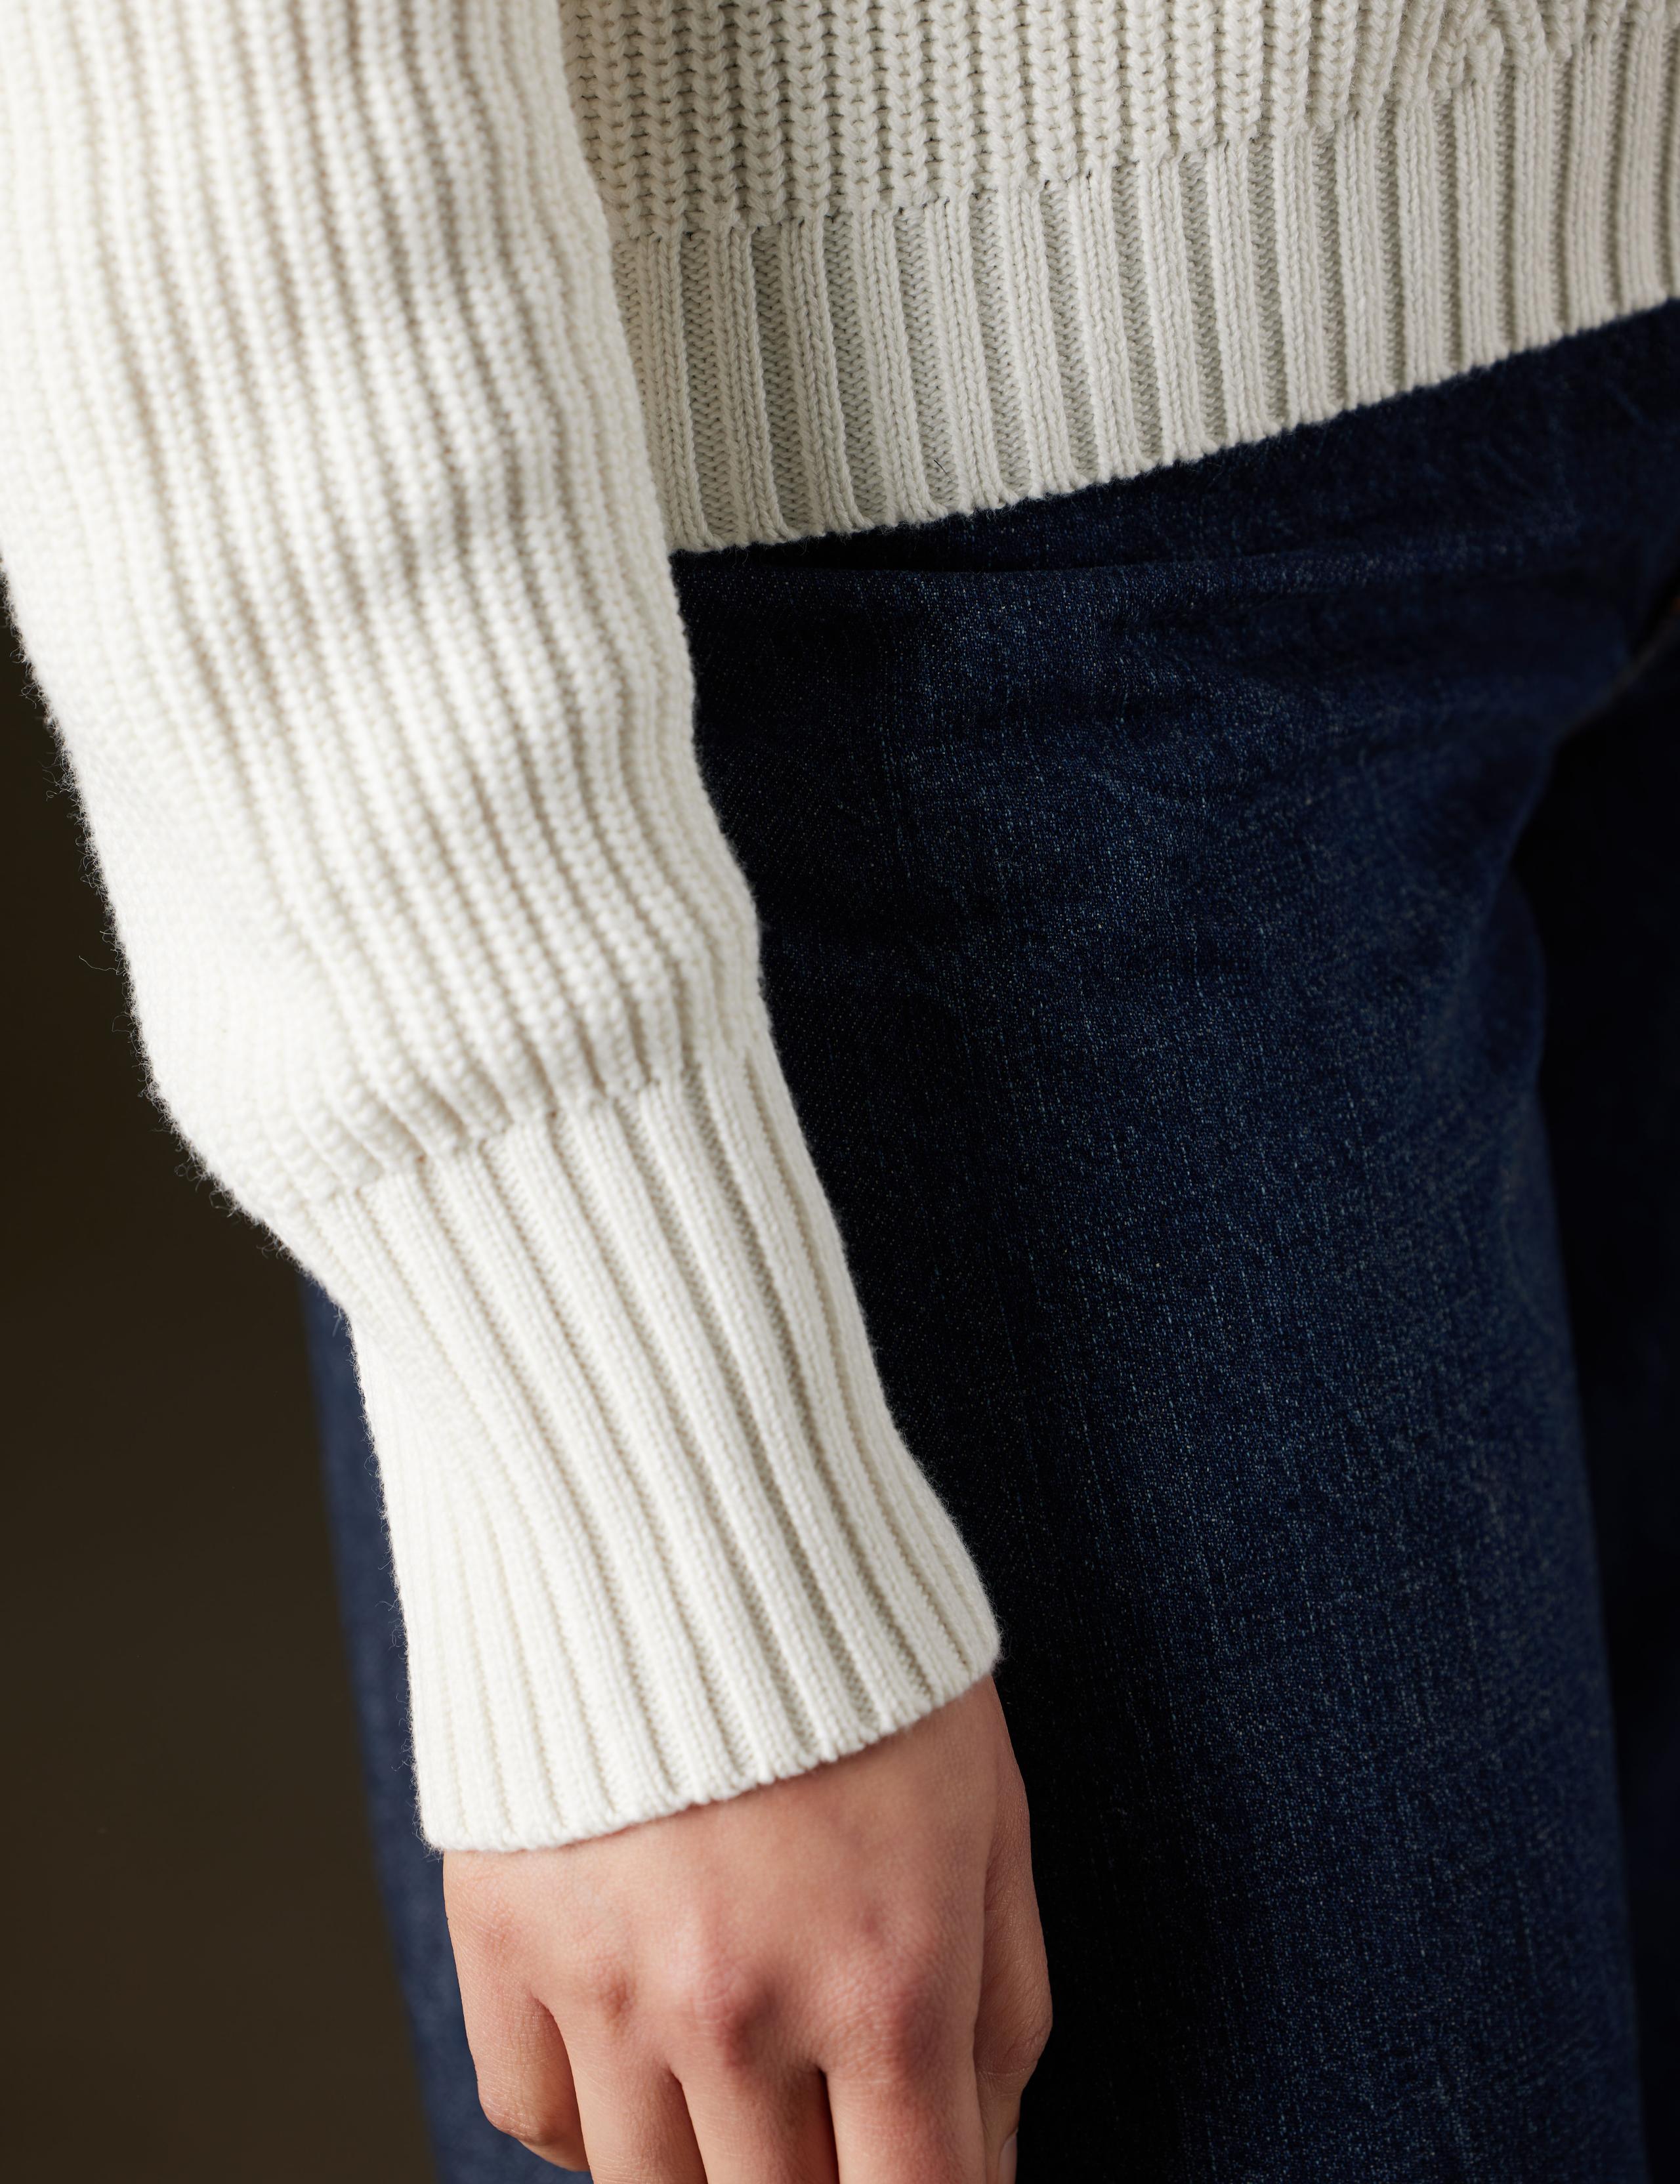 Closeup detail of sweater sleeve